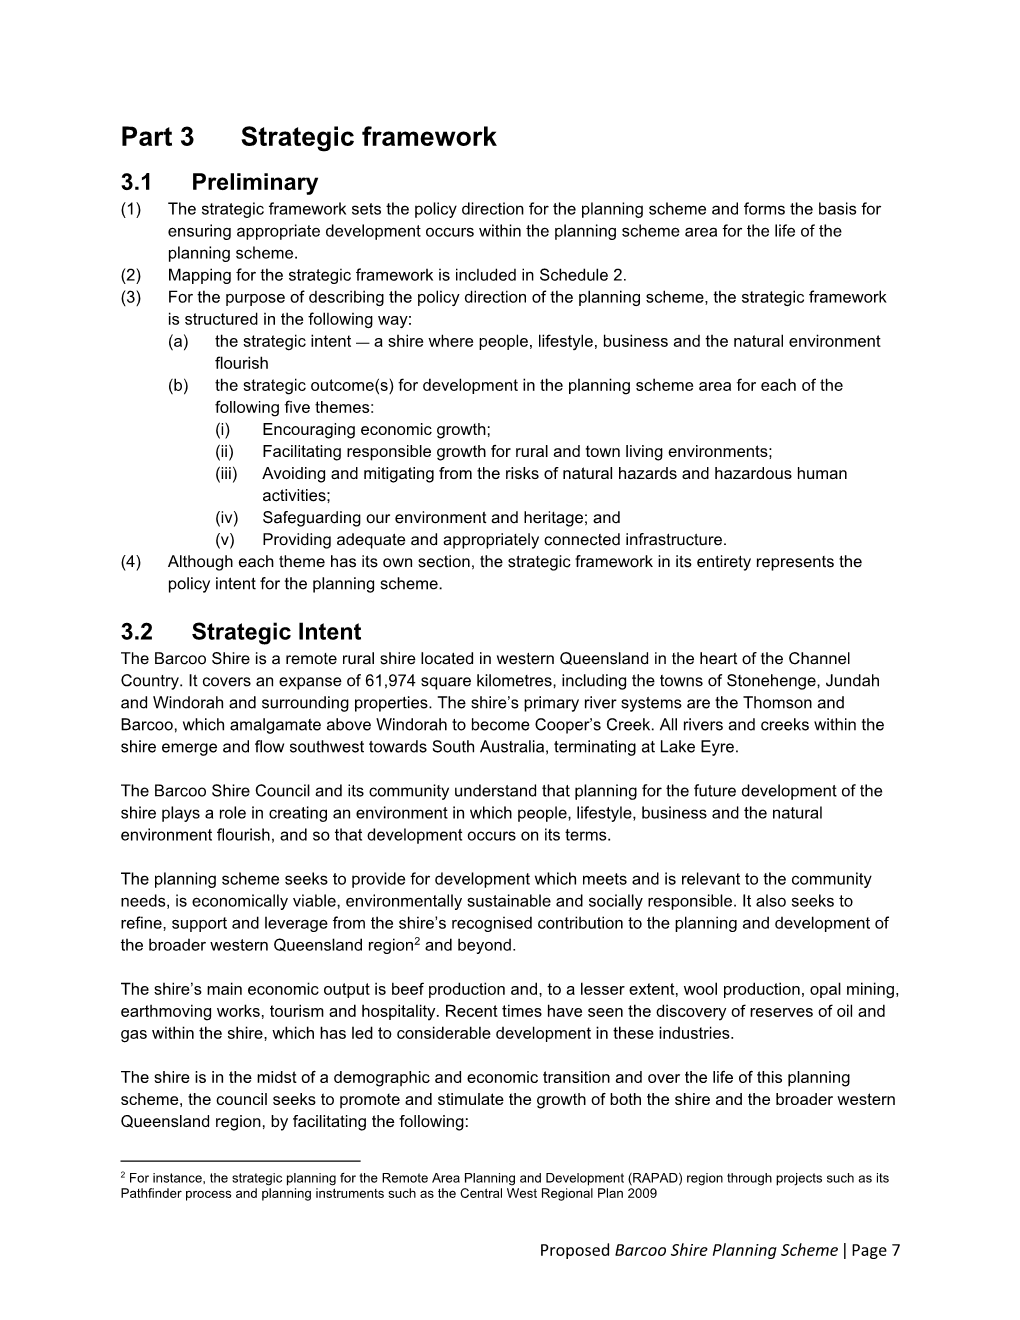 Part 3 (Strategic Framework) of the Proposed Planning Scheme